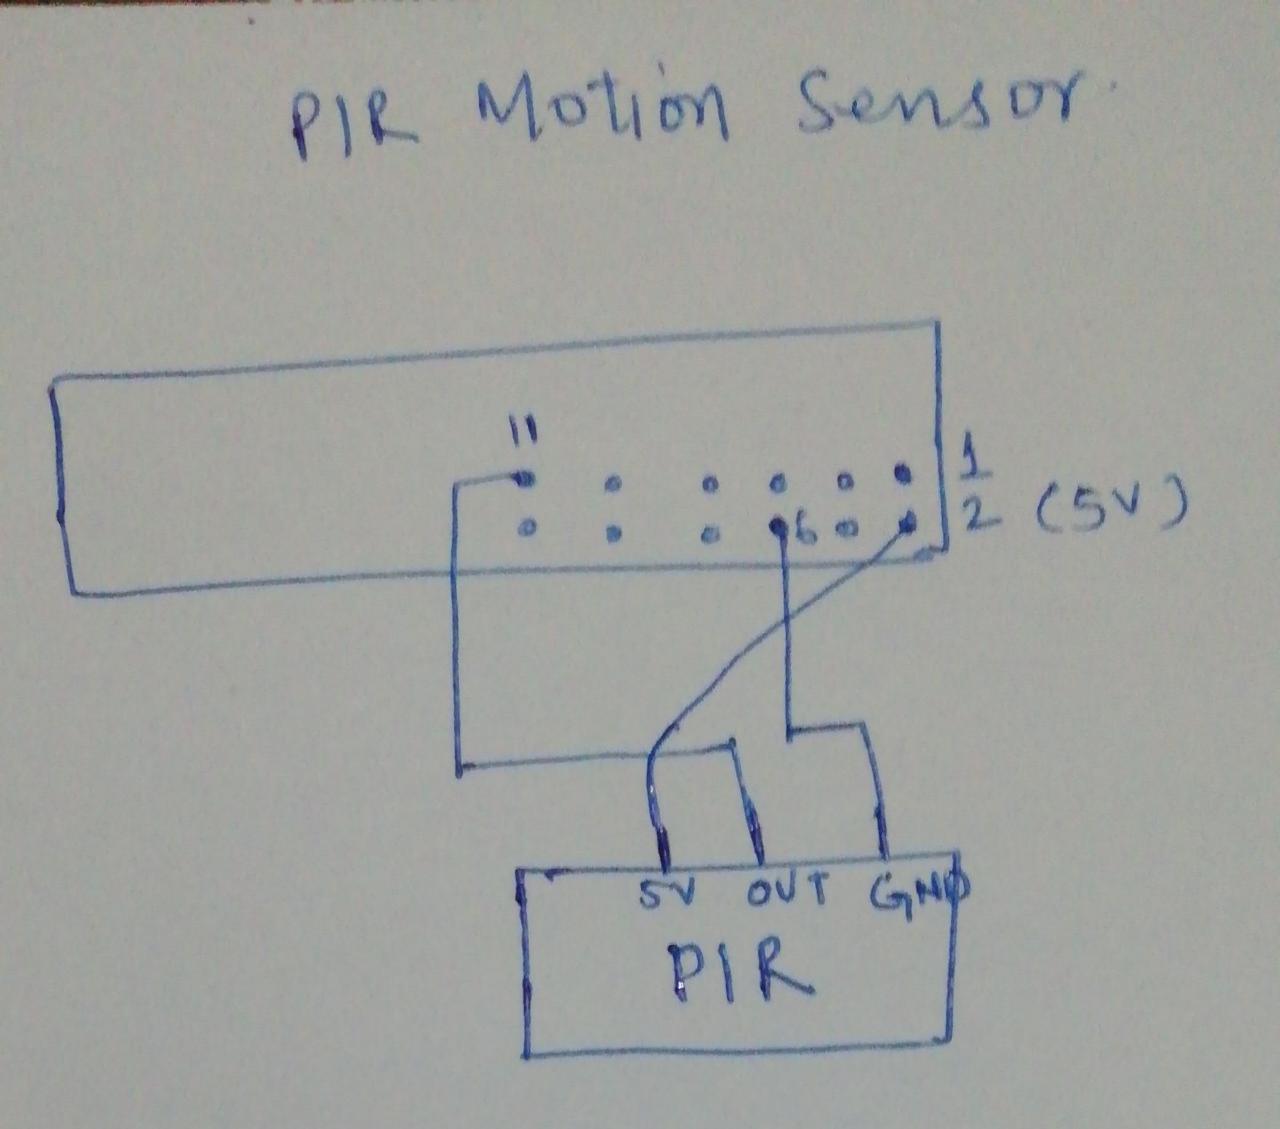 pir motion sensor connections